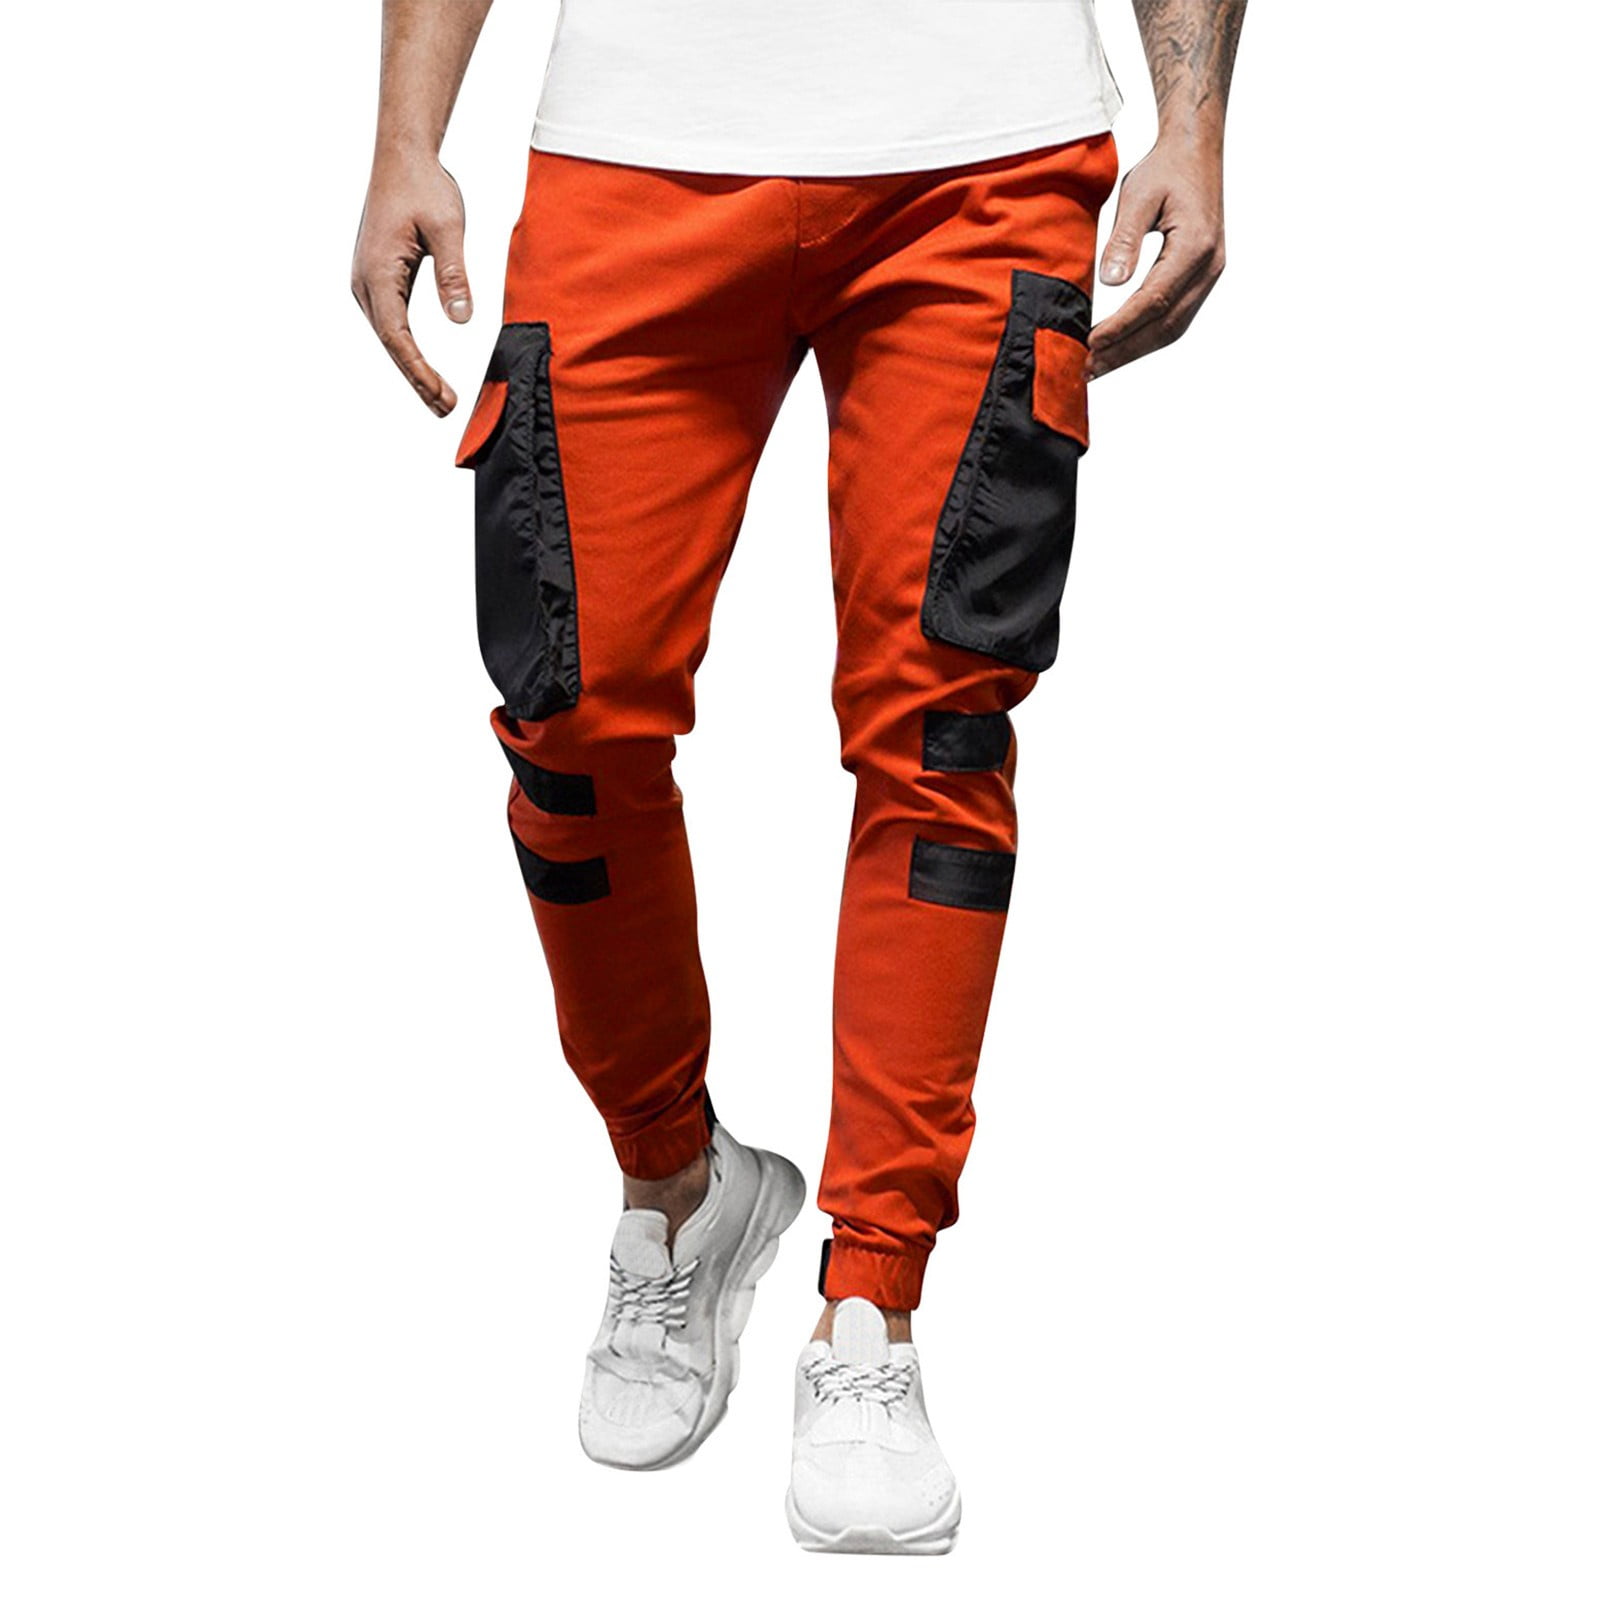 Men's Fashion Casual Stitching Leg Multi-pocket Pants Pants Mens Big And Tall Walmart.com